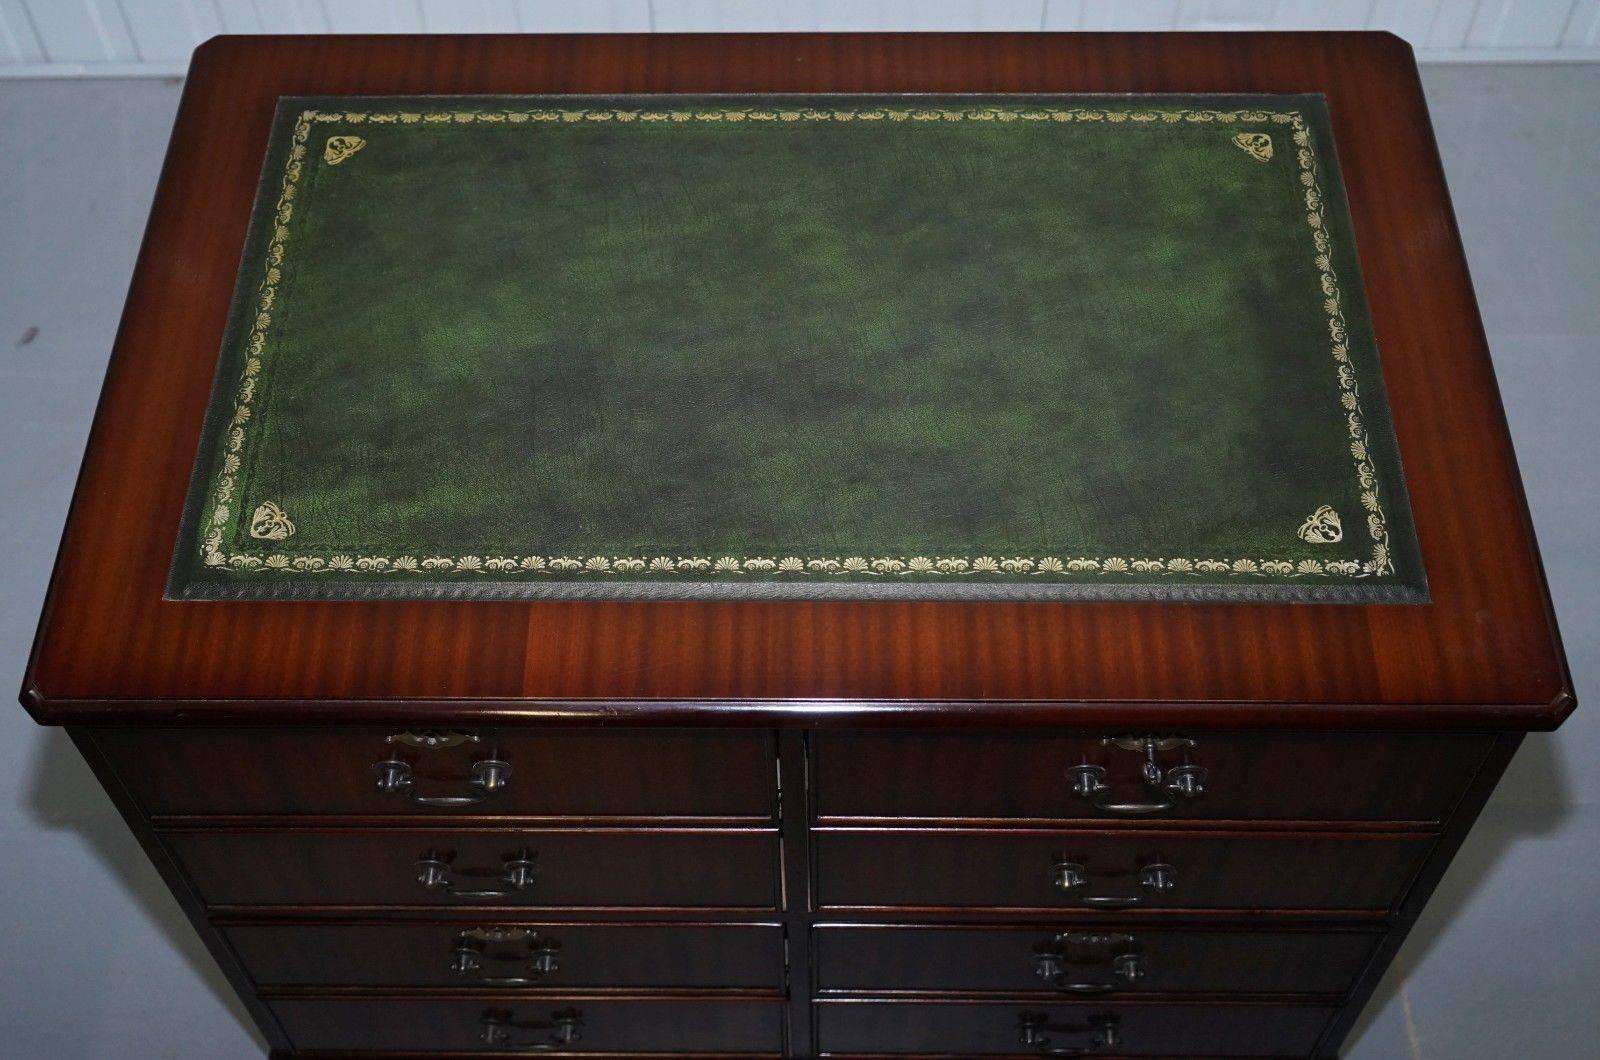 Regency Stunning Flamed Mahogany Veneer Twin Pedestal Fining Cabinet, Green Leather Desk